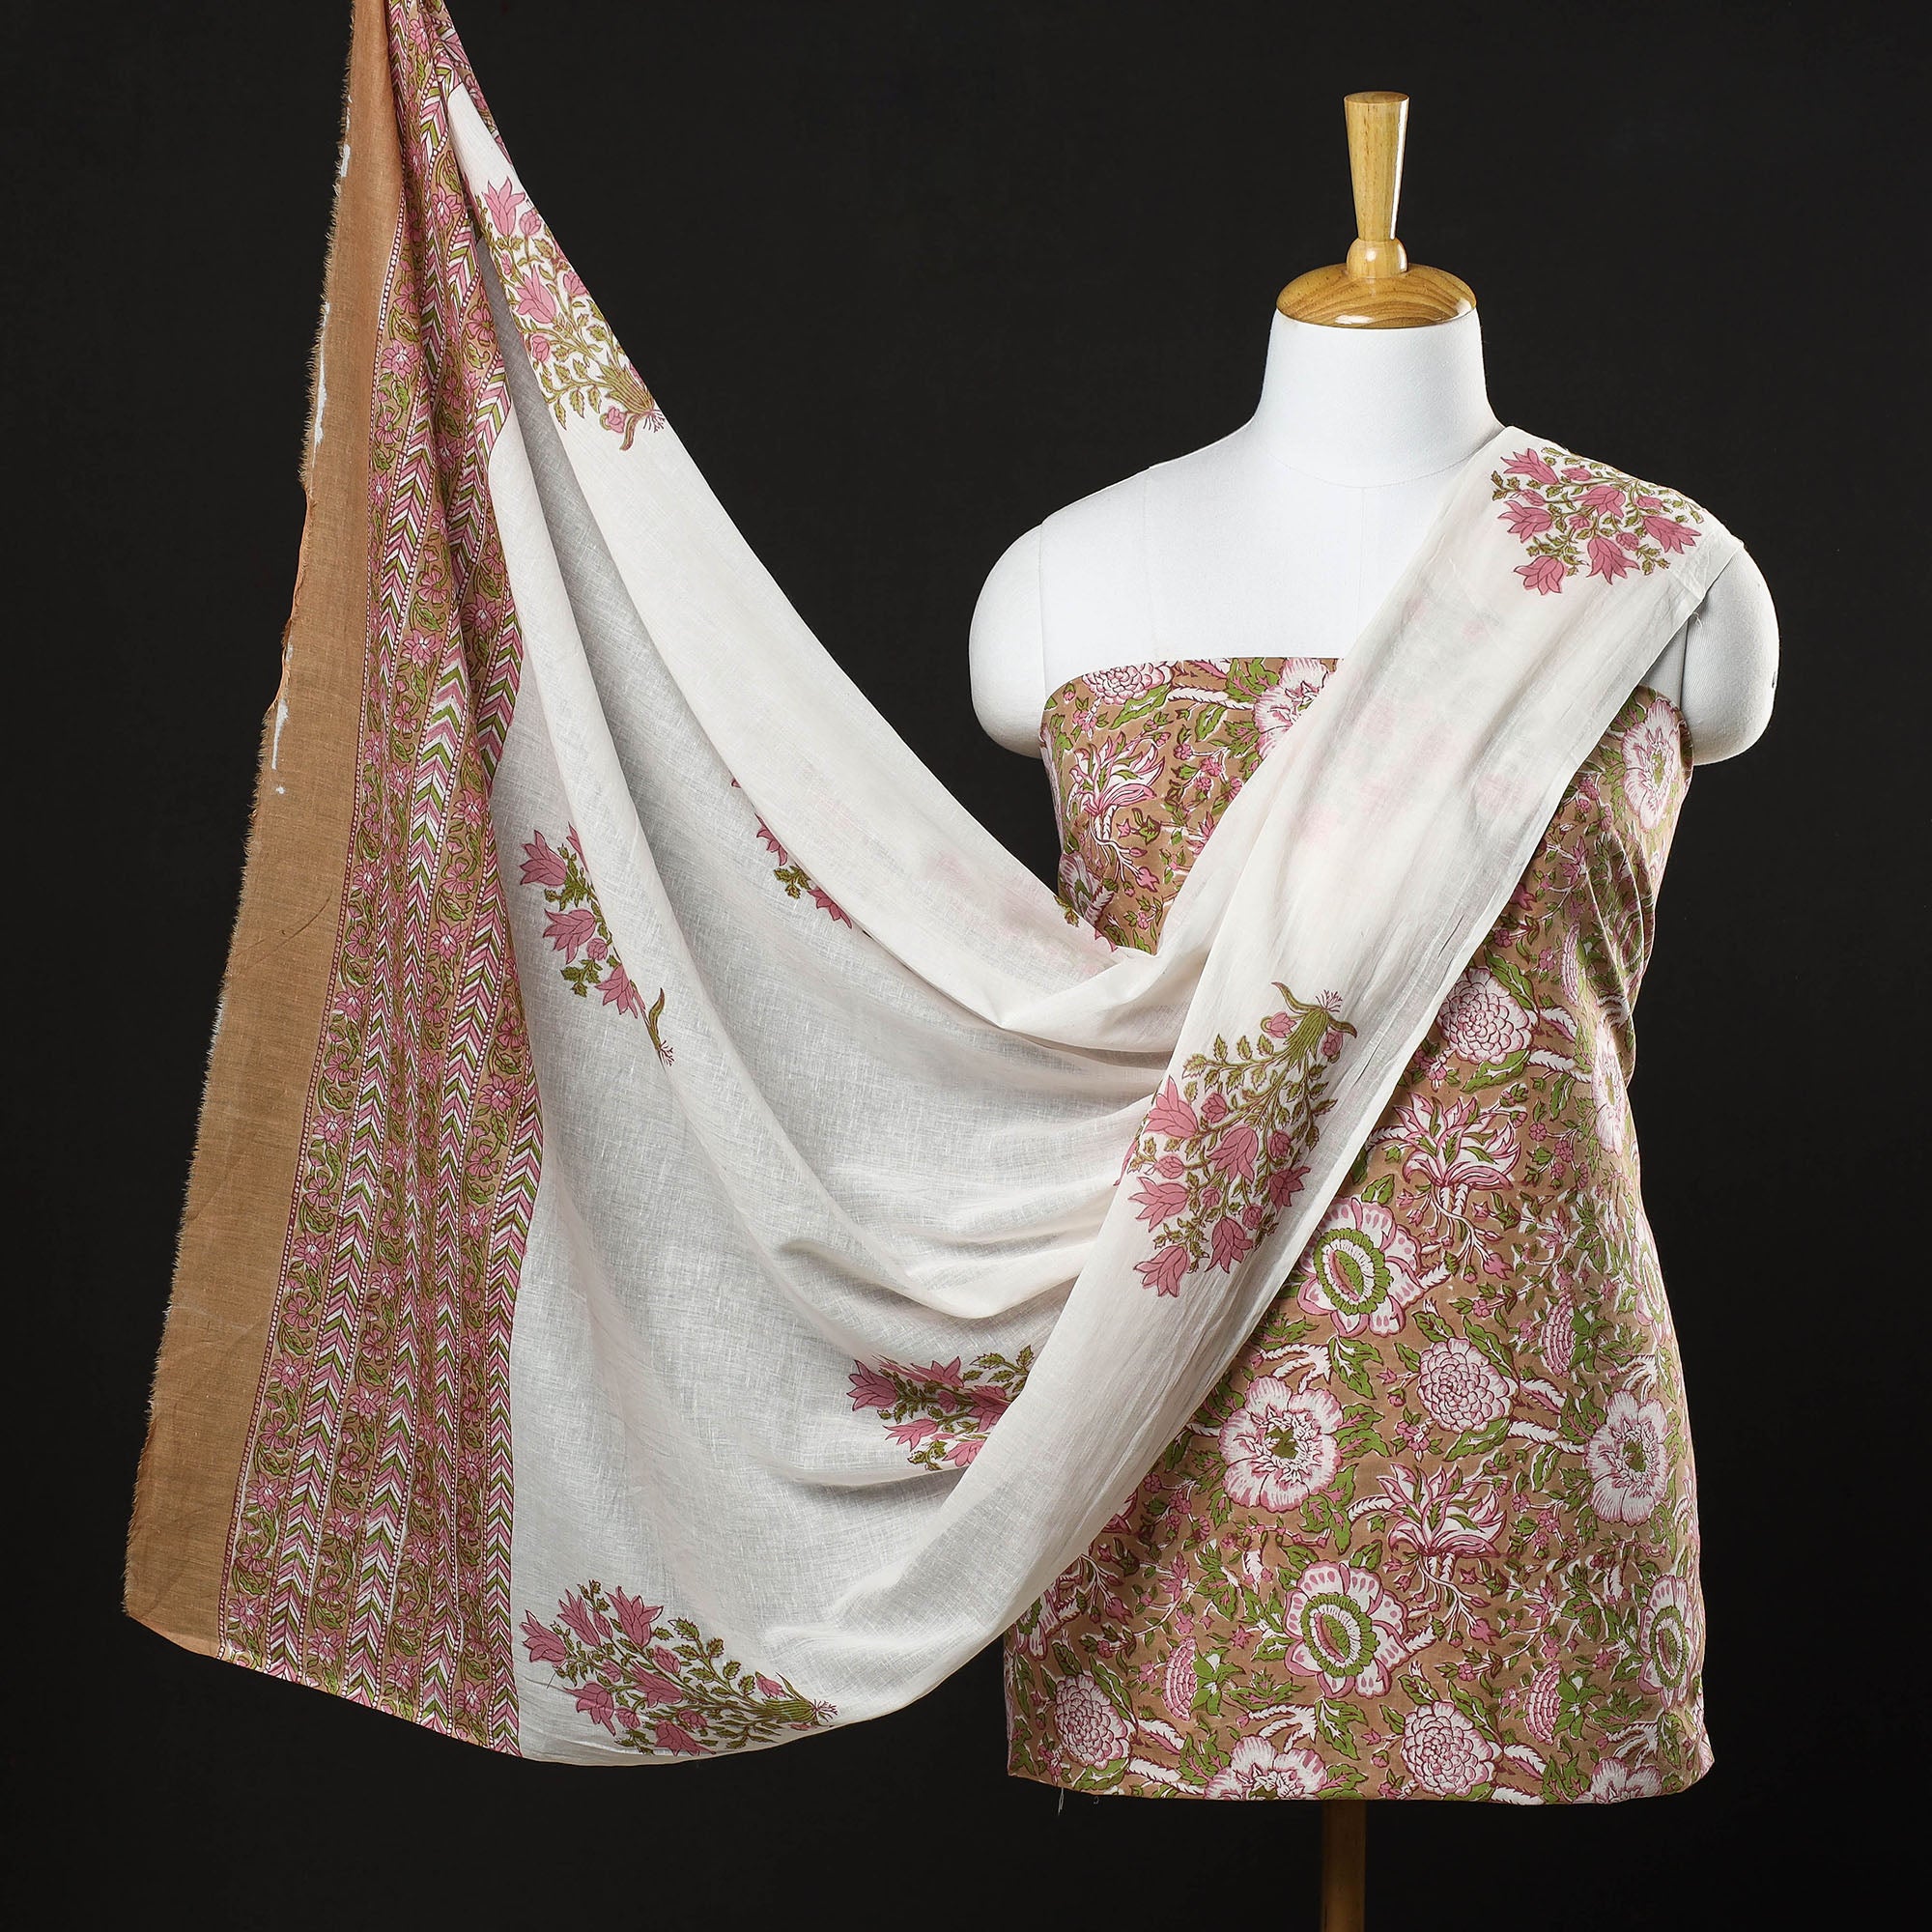 India rajasthan pushkar textile fabric hi-res stock photography and images  - Alamy